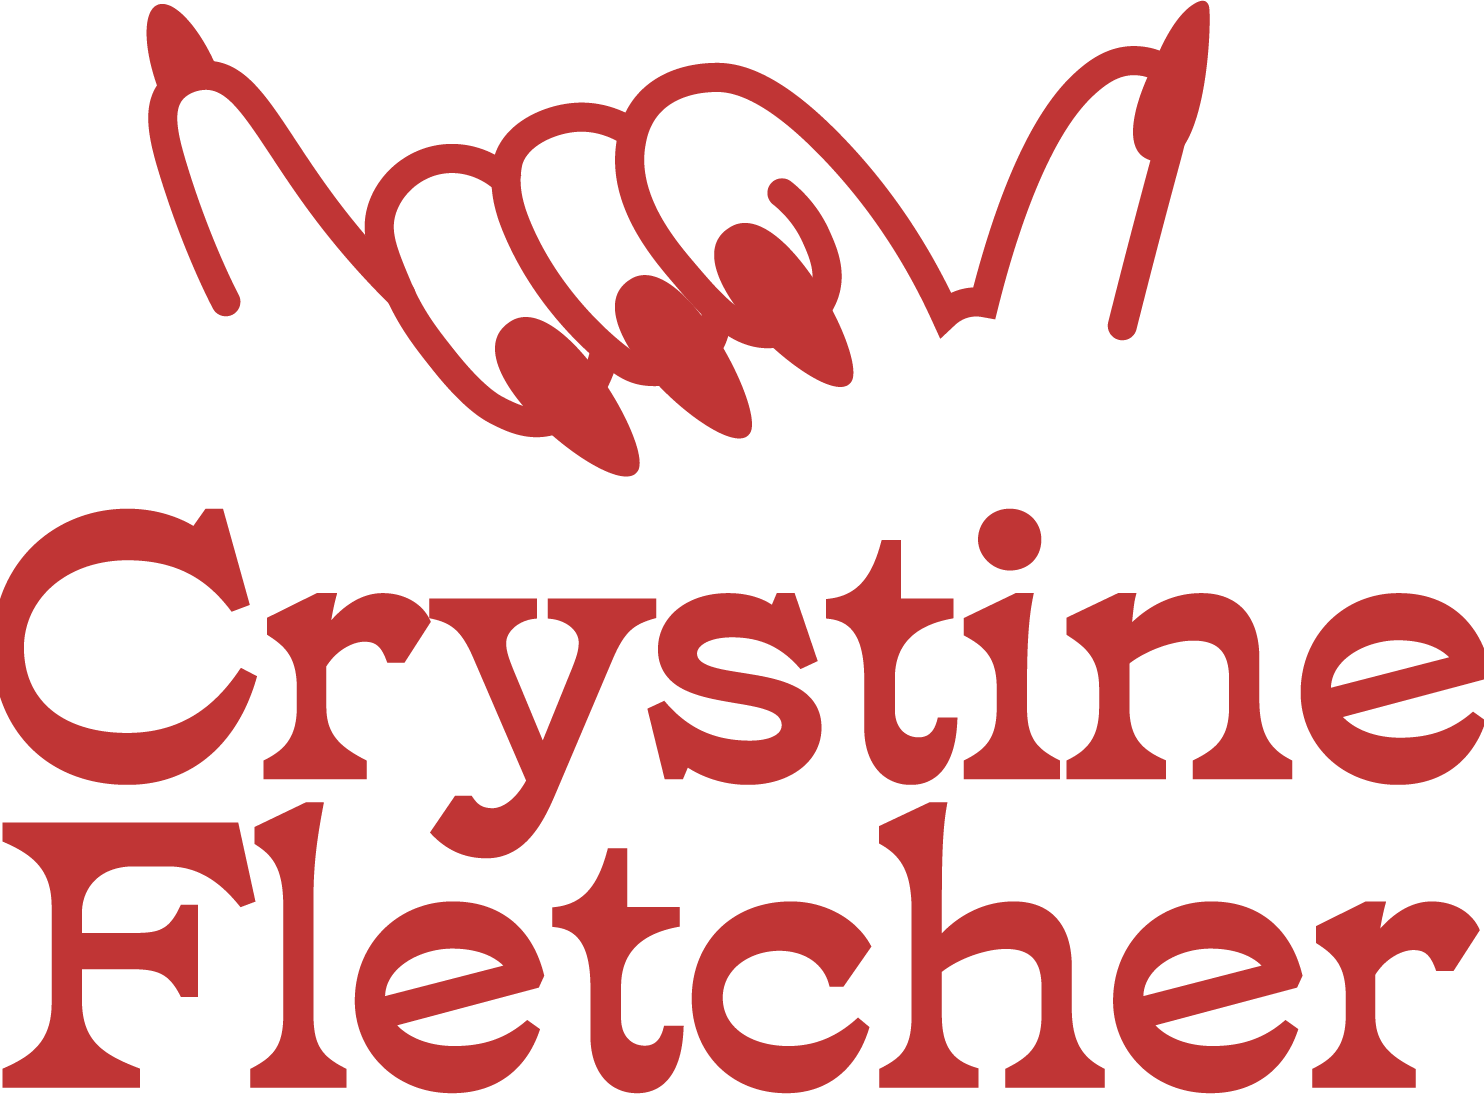 Crystine Fletcher